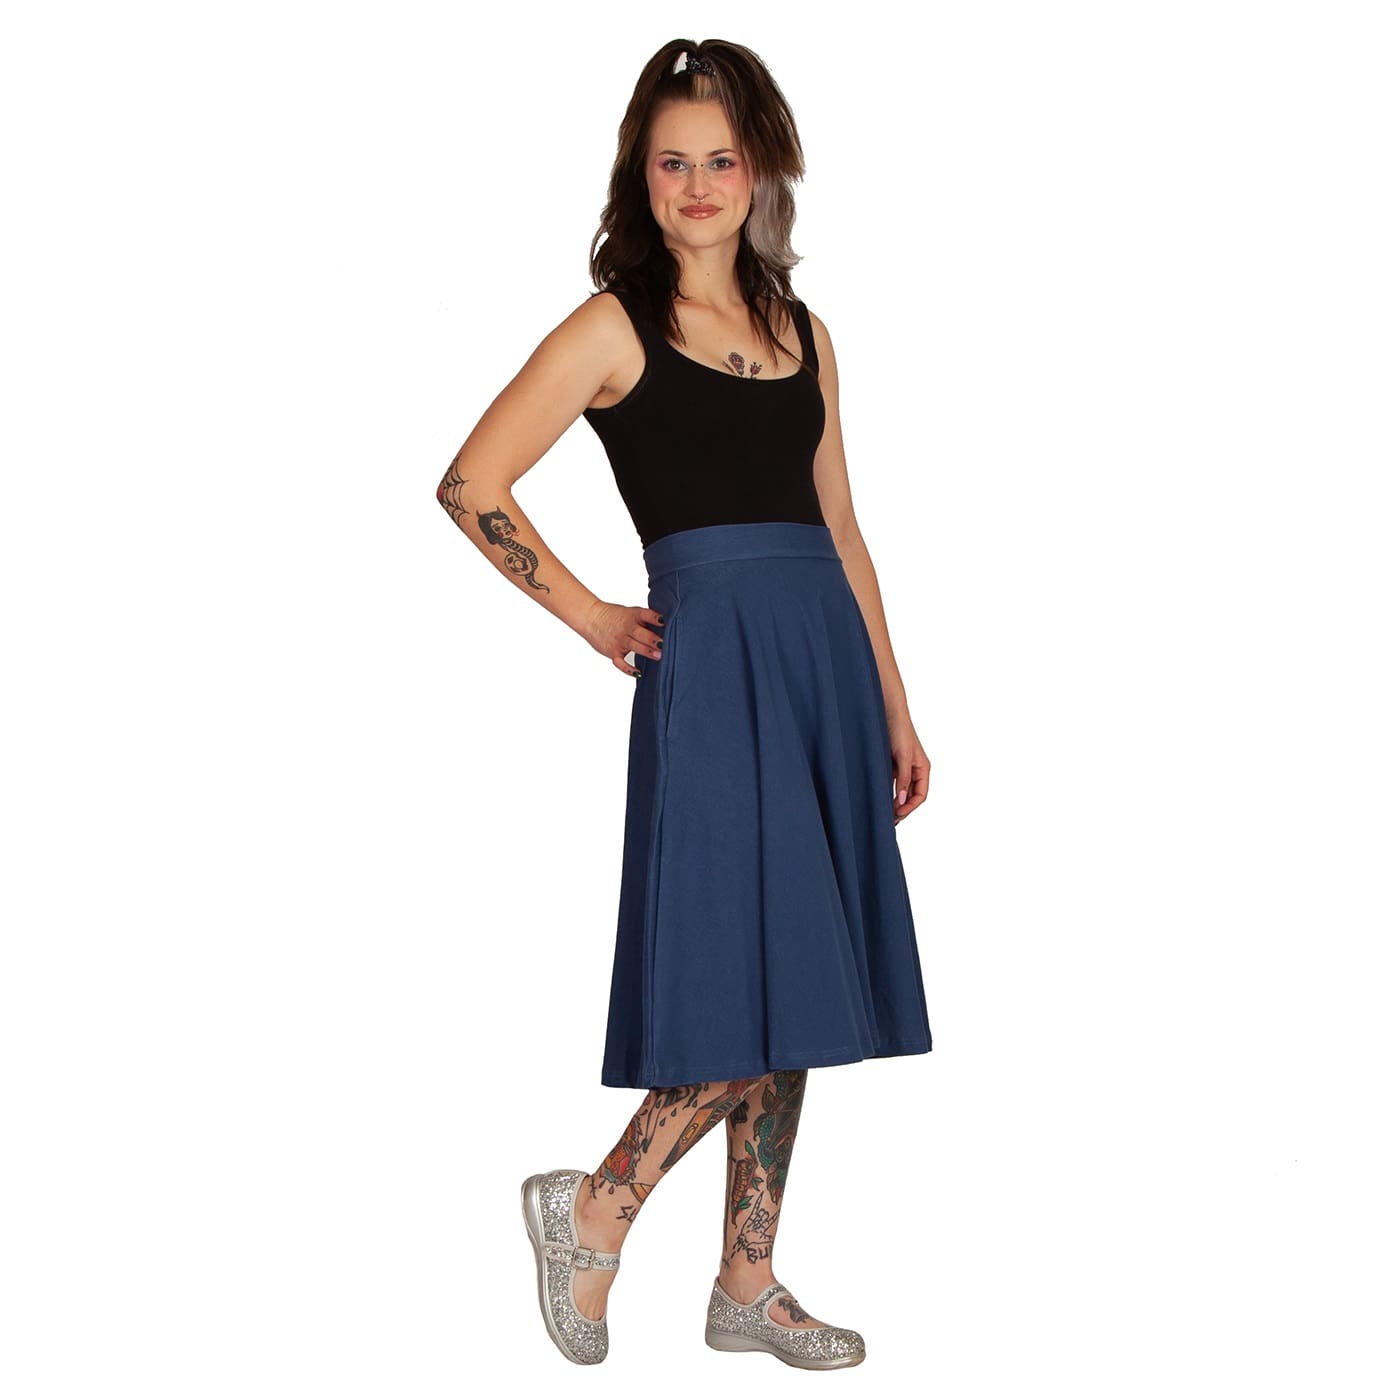 Blue Denim Swishy Skirt by RainbowsAndFairies.com.au (Denim Look - Jeggings - Rockabilly - Kitsch - Circle Skirt With Pockets - Mod Retro - Jean Skirt) - SKU: CL_SWISH_DENIM_BLU - Pic-06